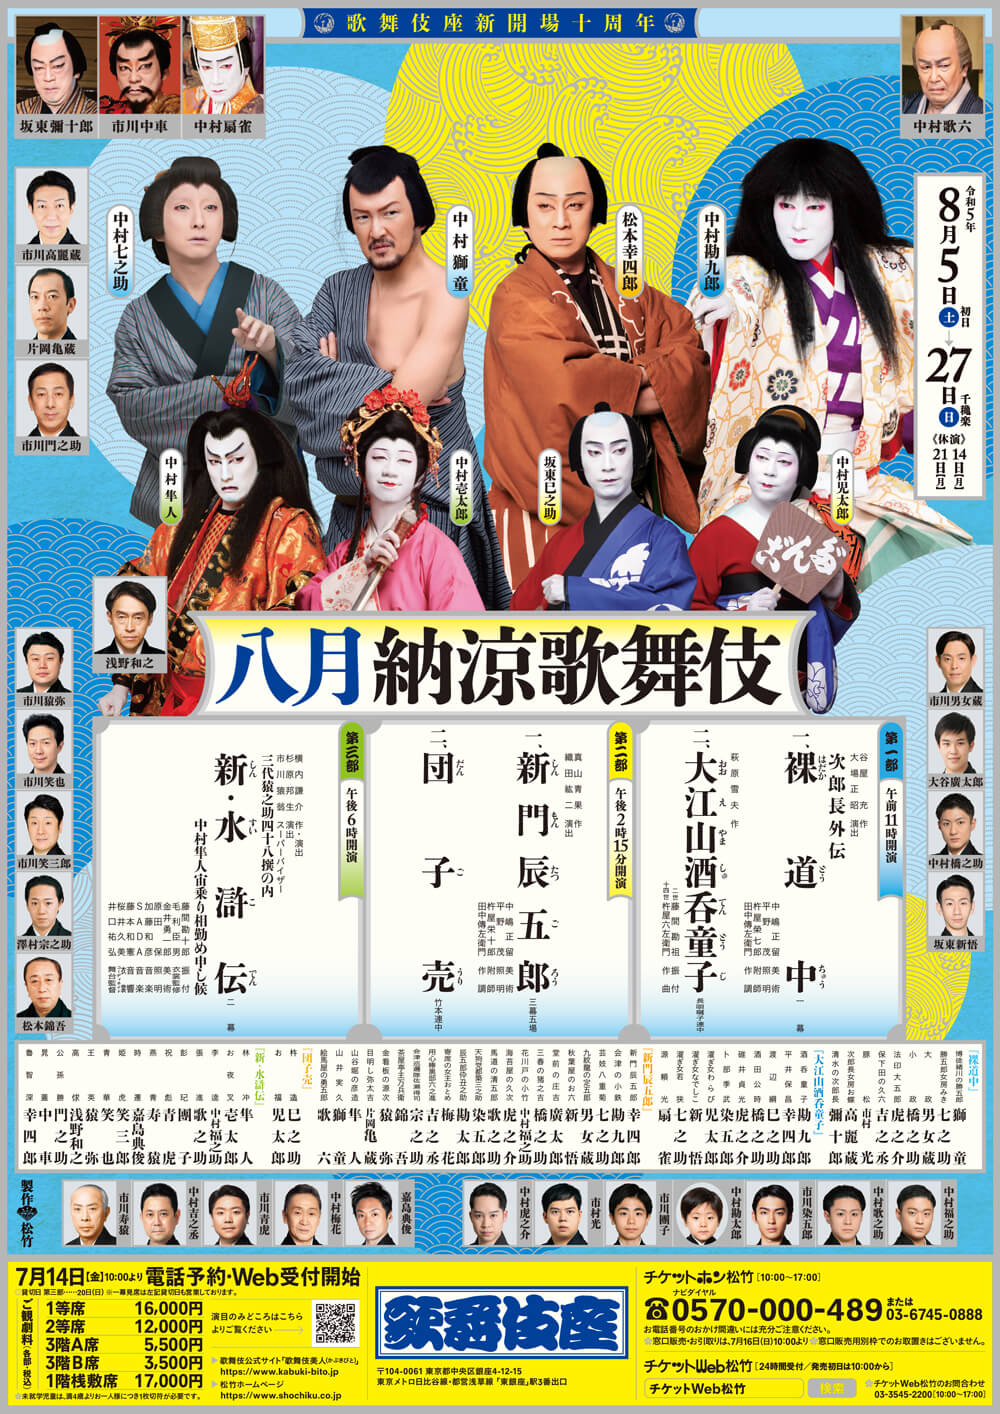 August Program at the kabukiza